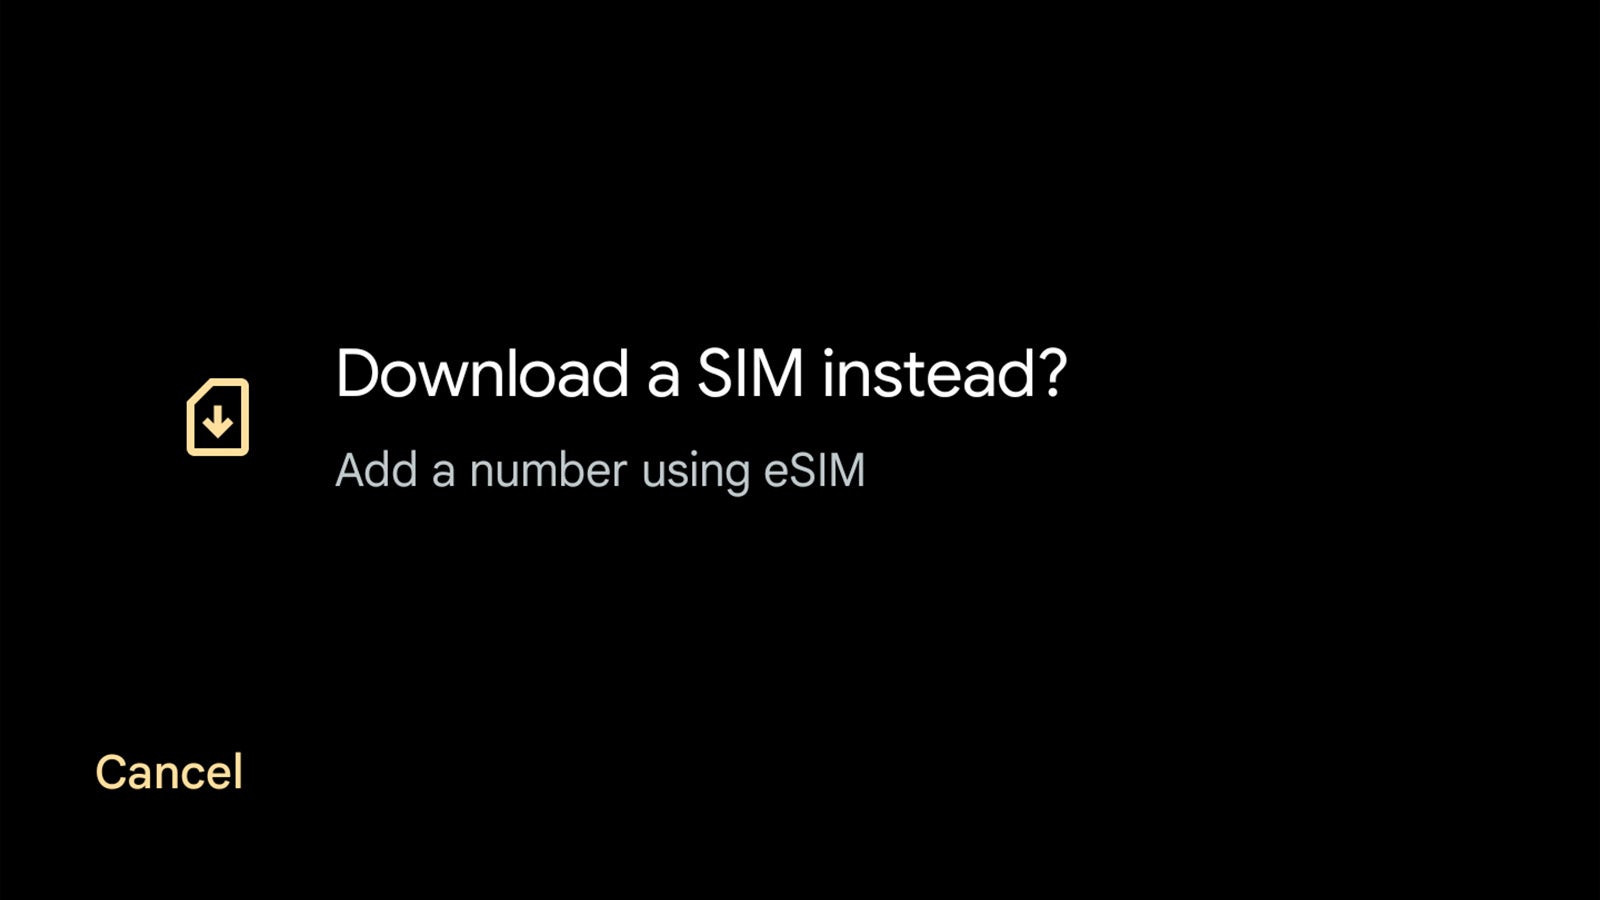 Download an eSIM instead